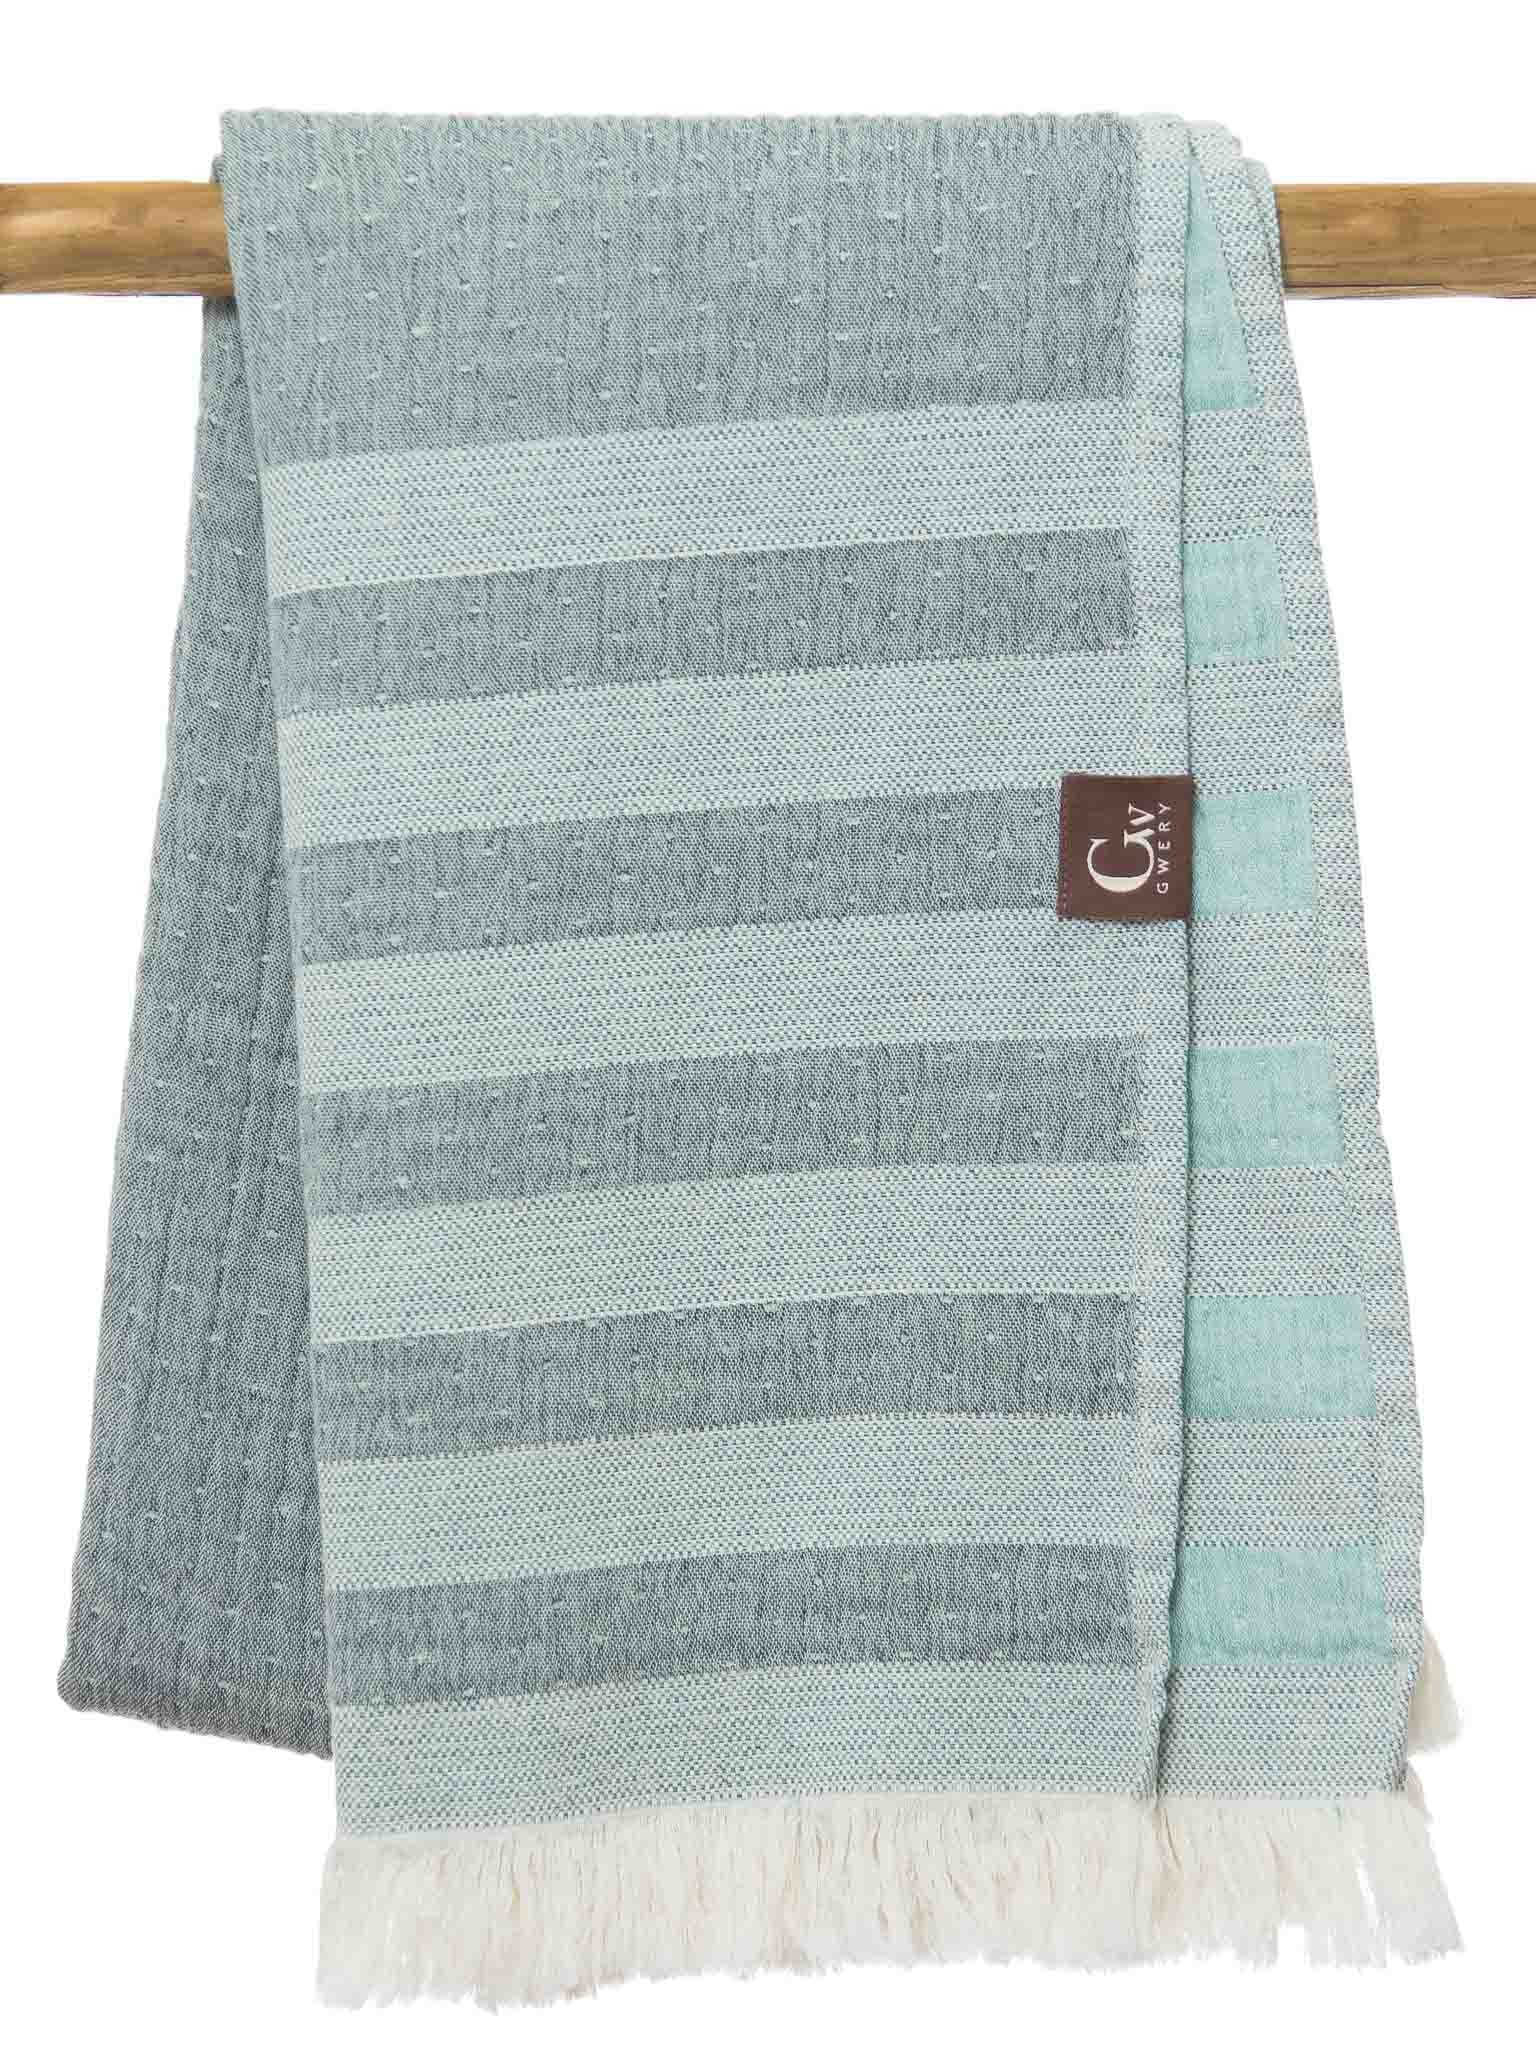 Light and dark green striped beach towel folded